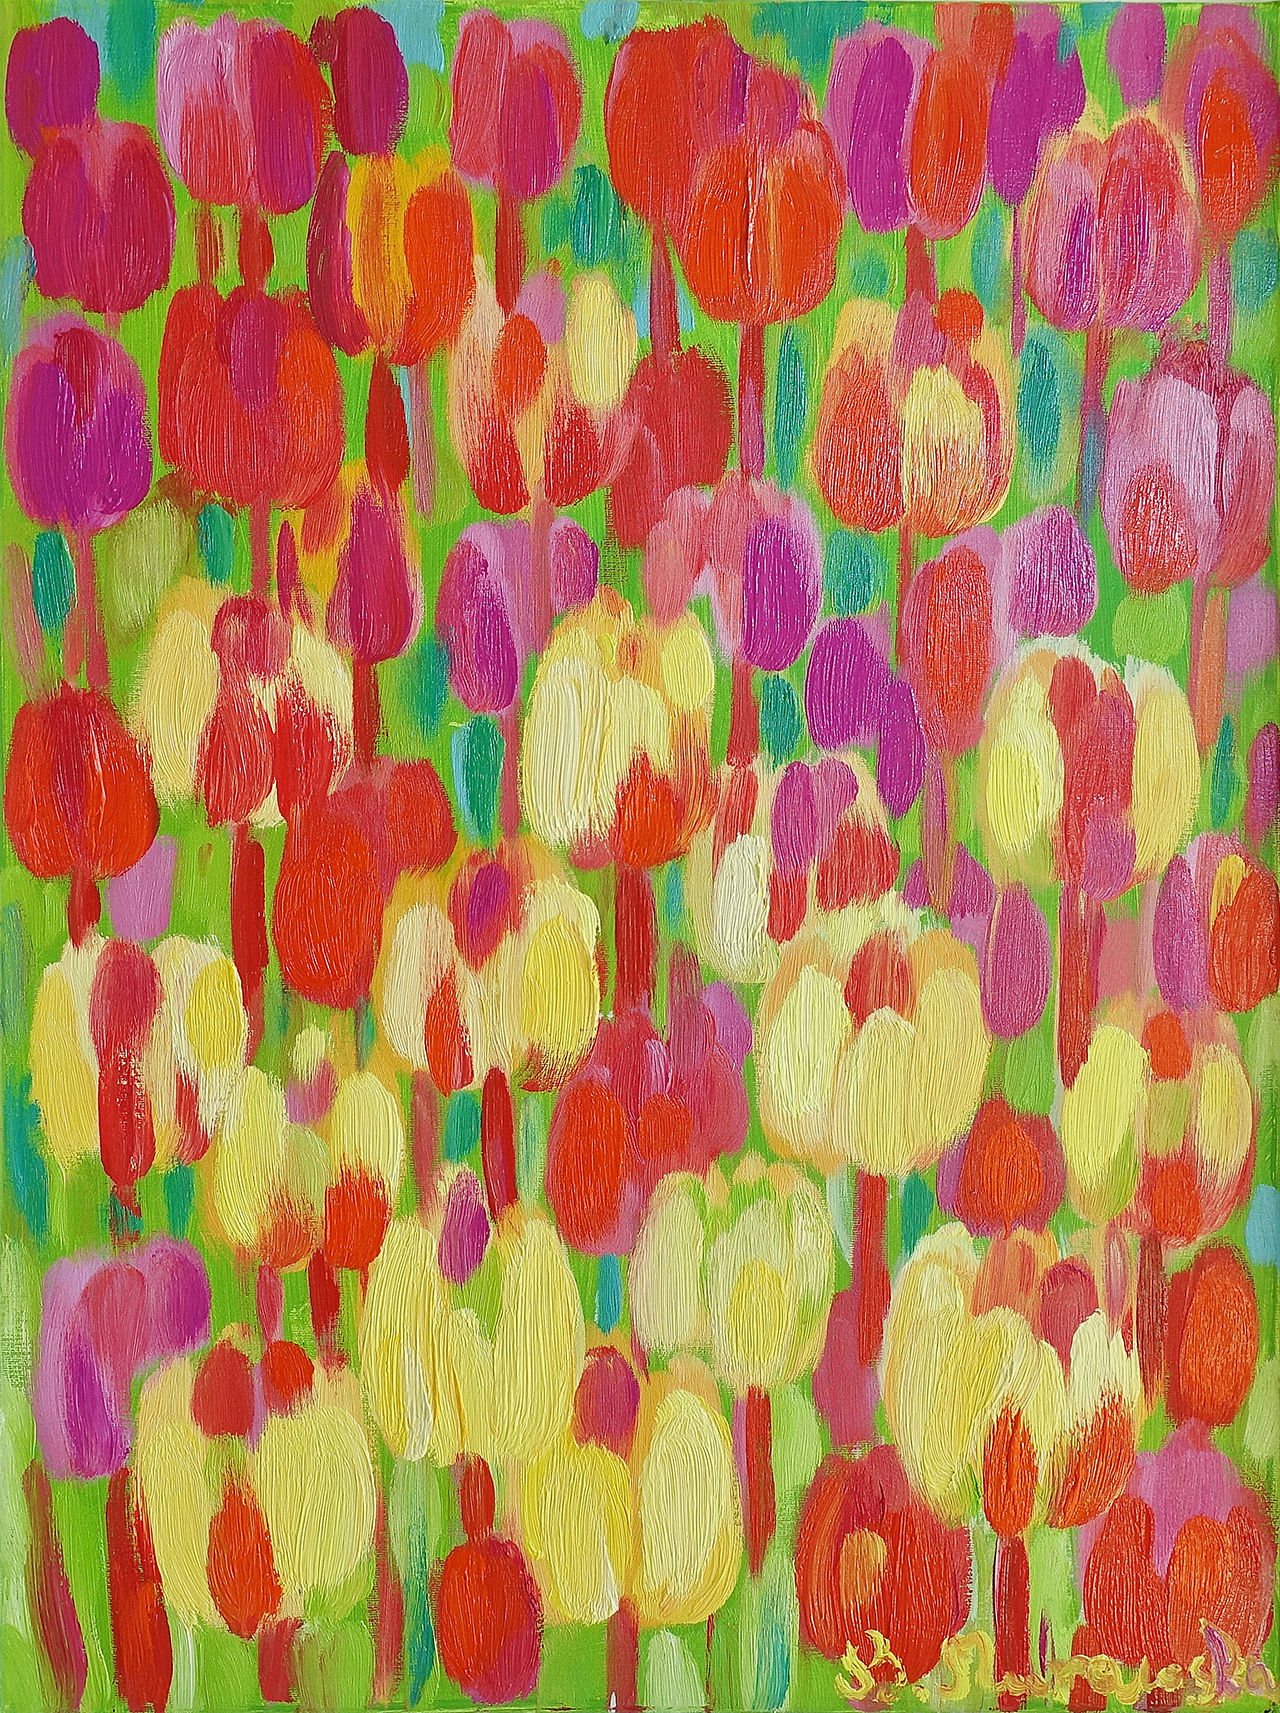 Beata Murawska - It's summer already (Oil on Canvas | Größe: 66 x 86 cm | Preis: 6500 PLN)